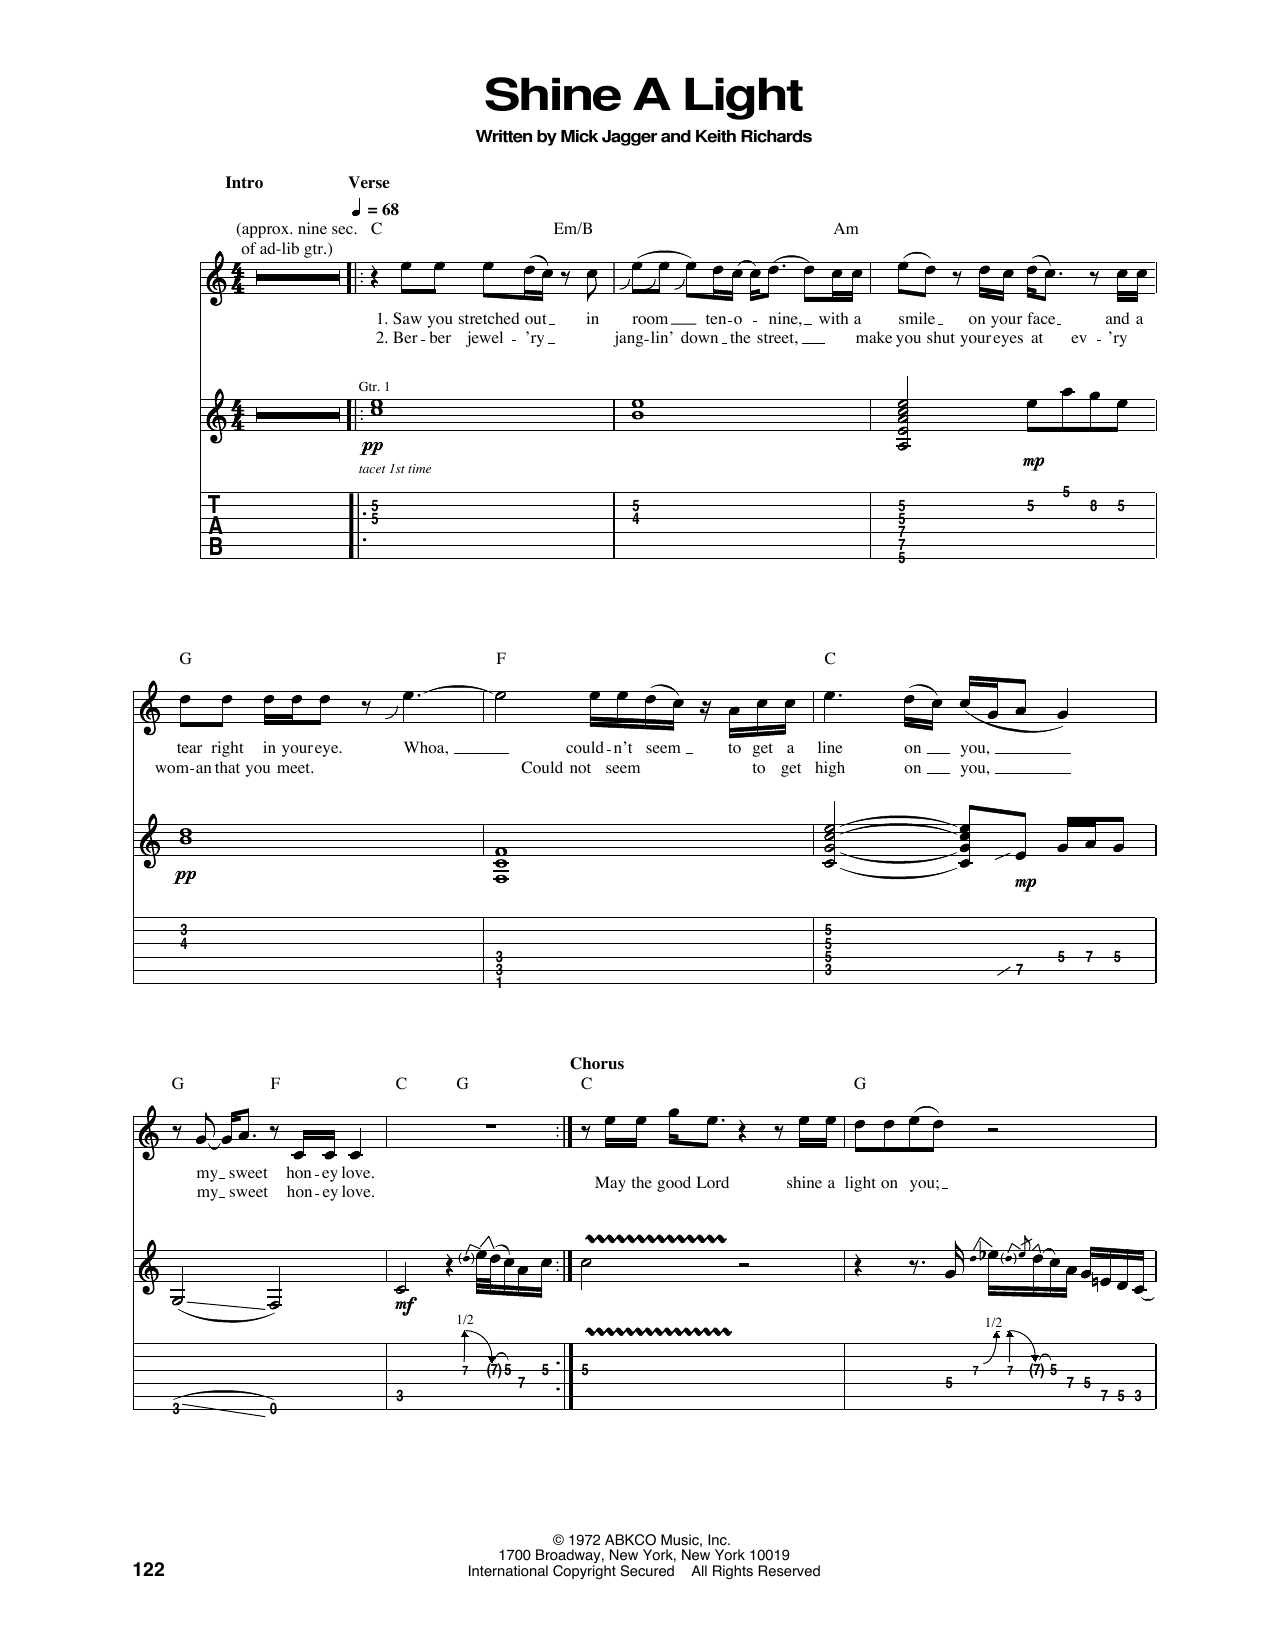 Rolling Stones "Shine A Light" Sheet Music PDF Notes, Chords | Score Guitar Printable. SKU: 418473